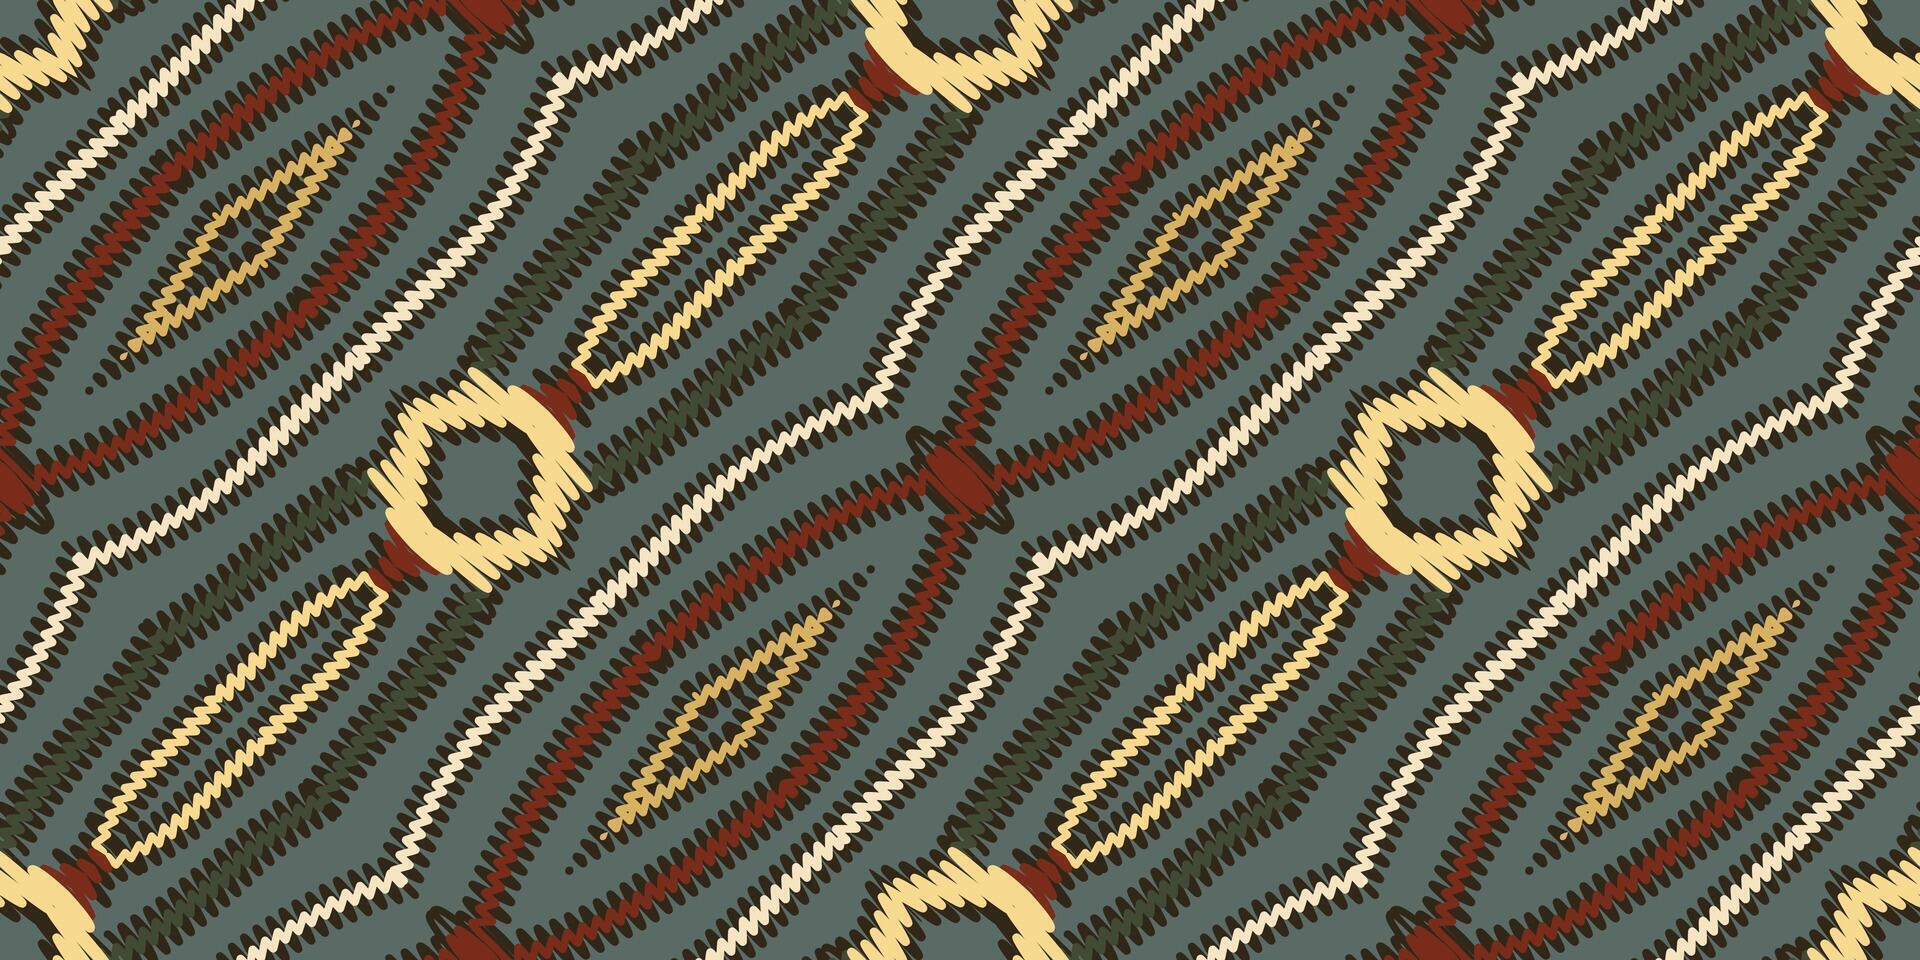 Tie dye Pattern Seamless Australian aboriginal pattern Motif embroidery, Ikat embroidery vector Design for Print vyshyvanka placemat quilt sarong sarong beach kurtis Indian motifs